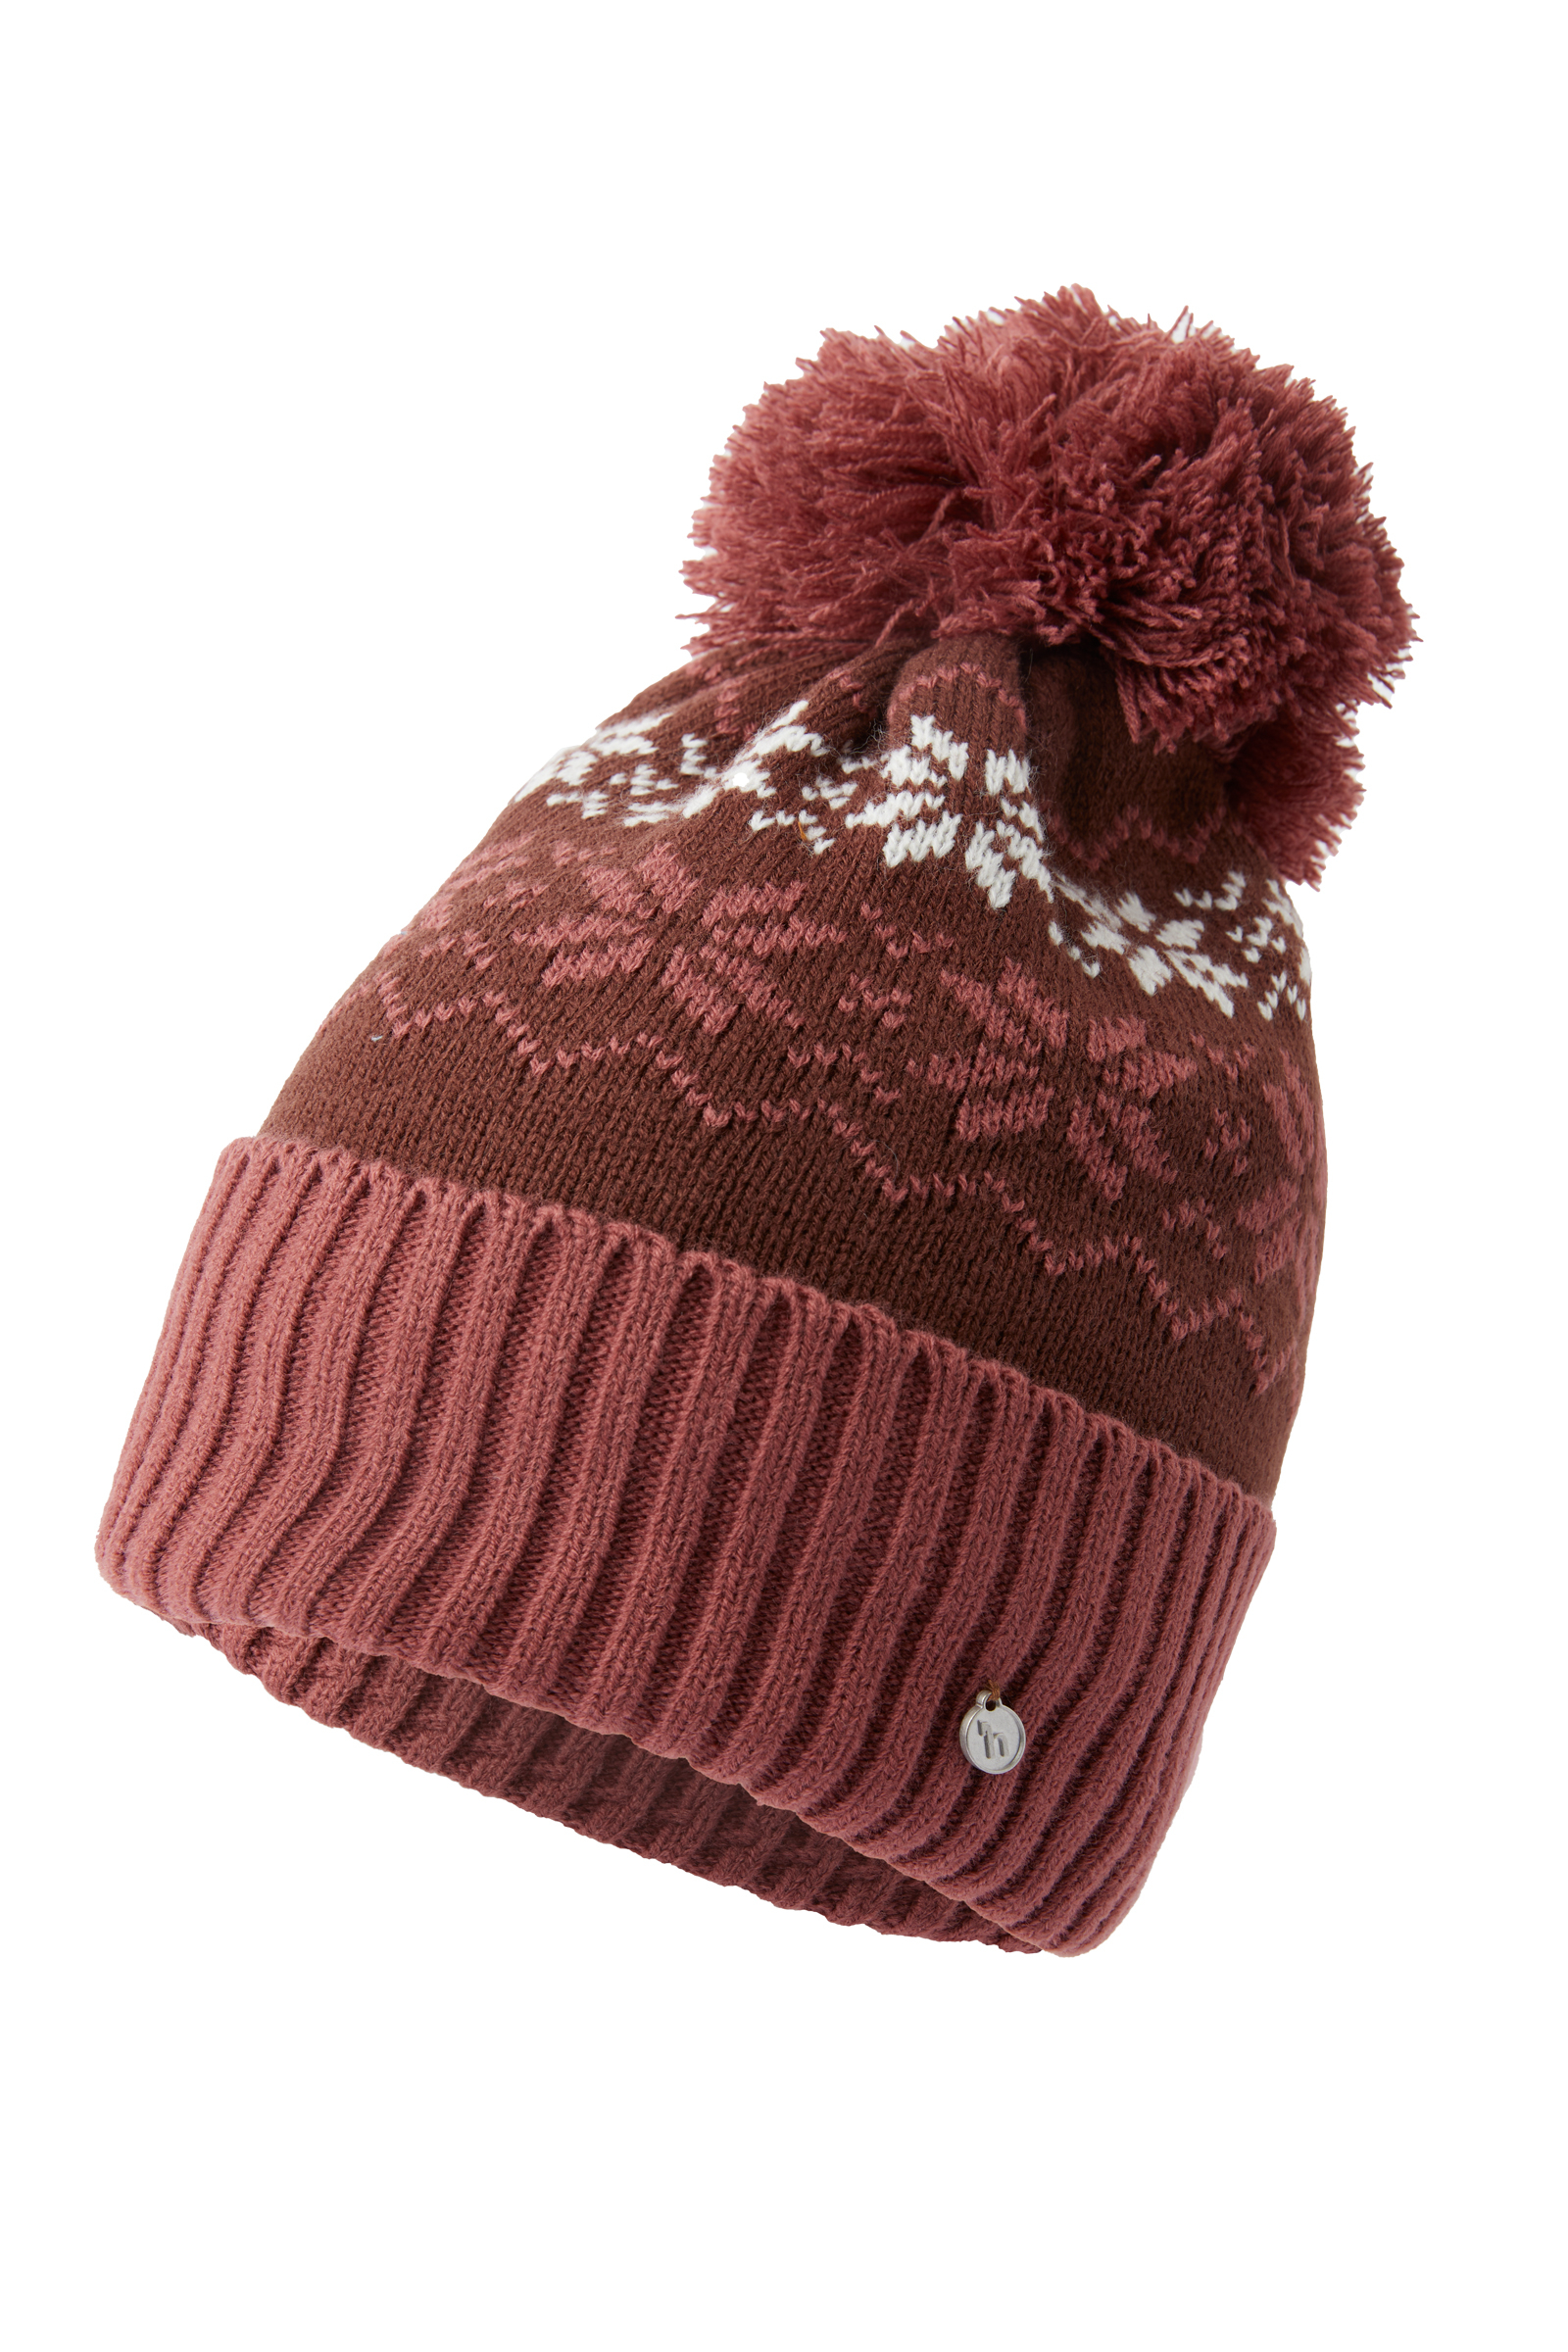 30965 Horze Maddox Kids Knit Winter Hat - RIDE